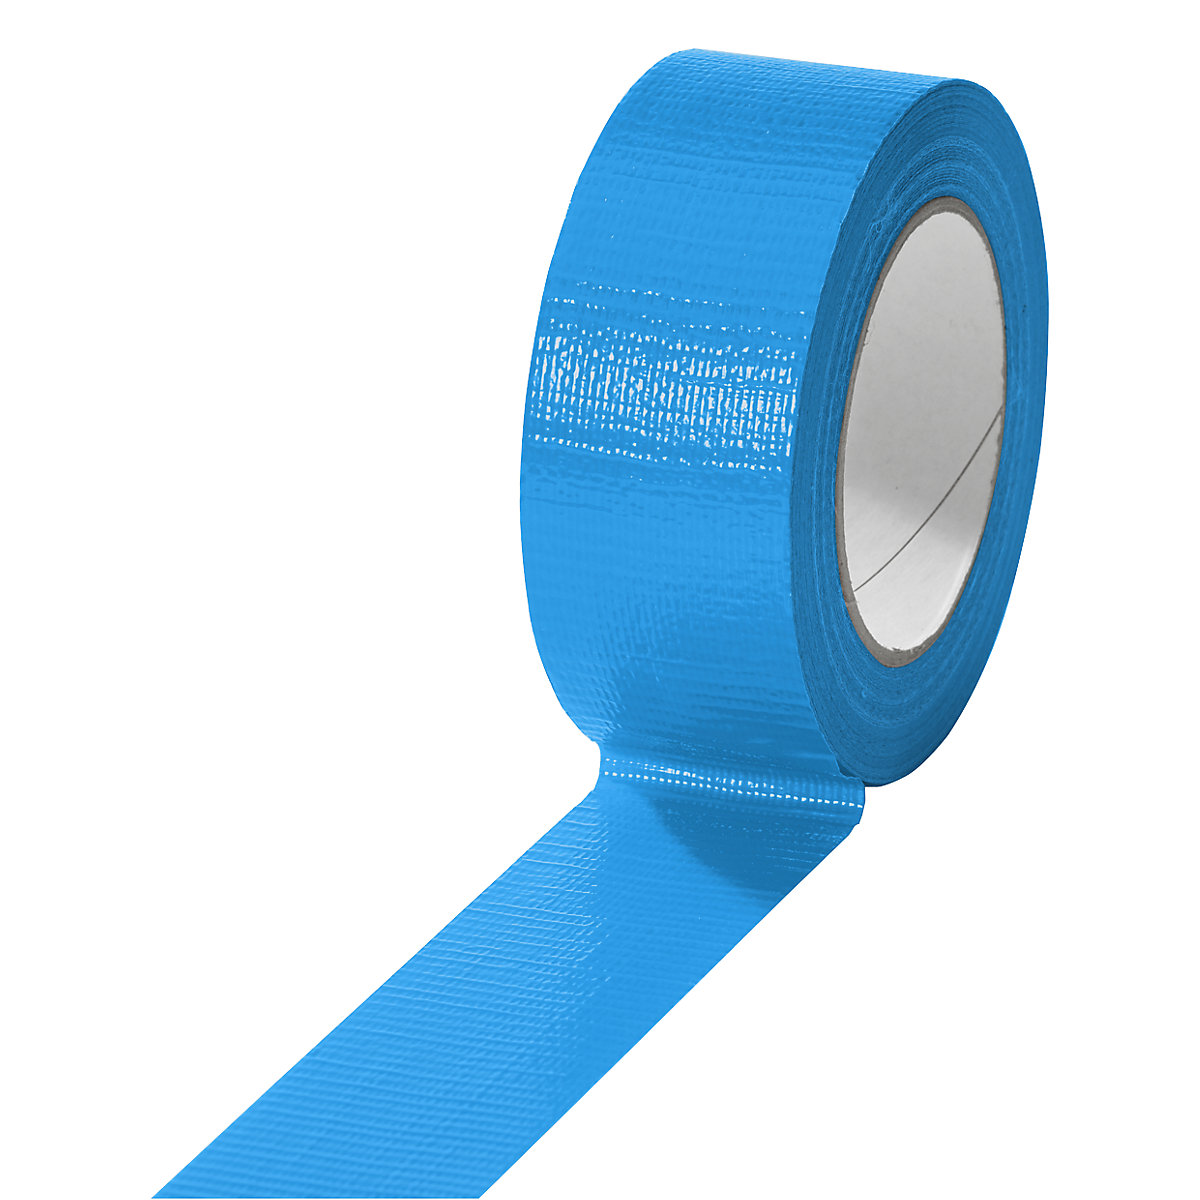 Tkaninová páska, v různých barvách, bal.j. 24 rolí, modrá, šířka pásky 38 mm-14